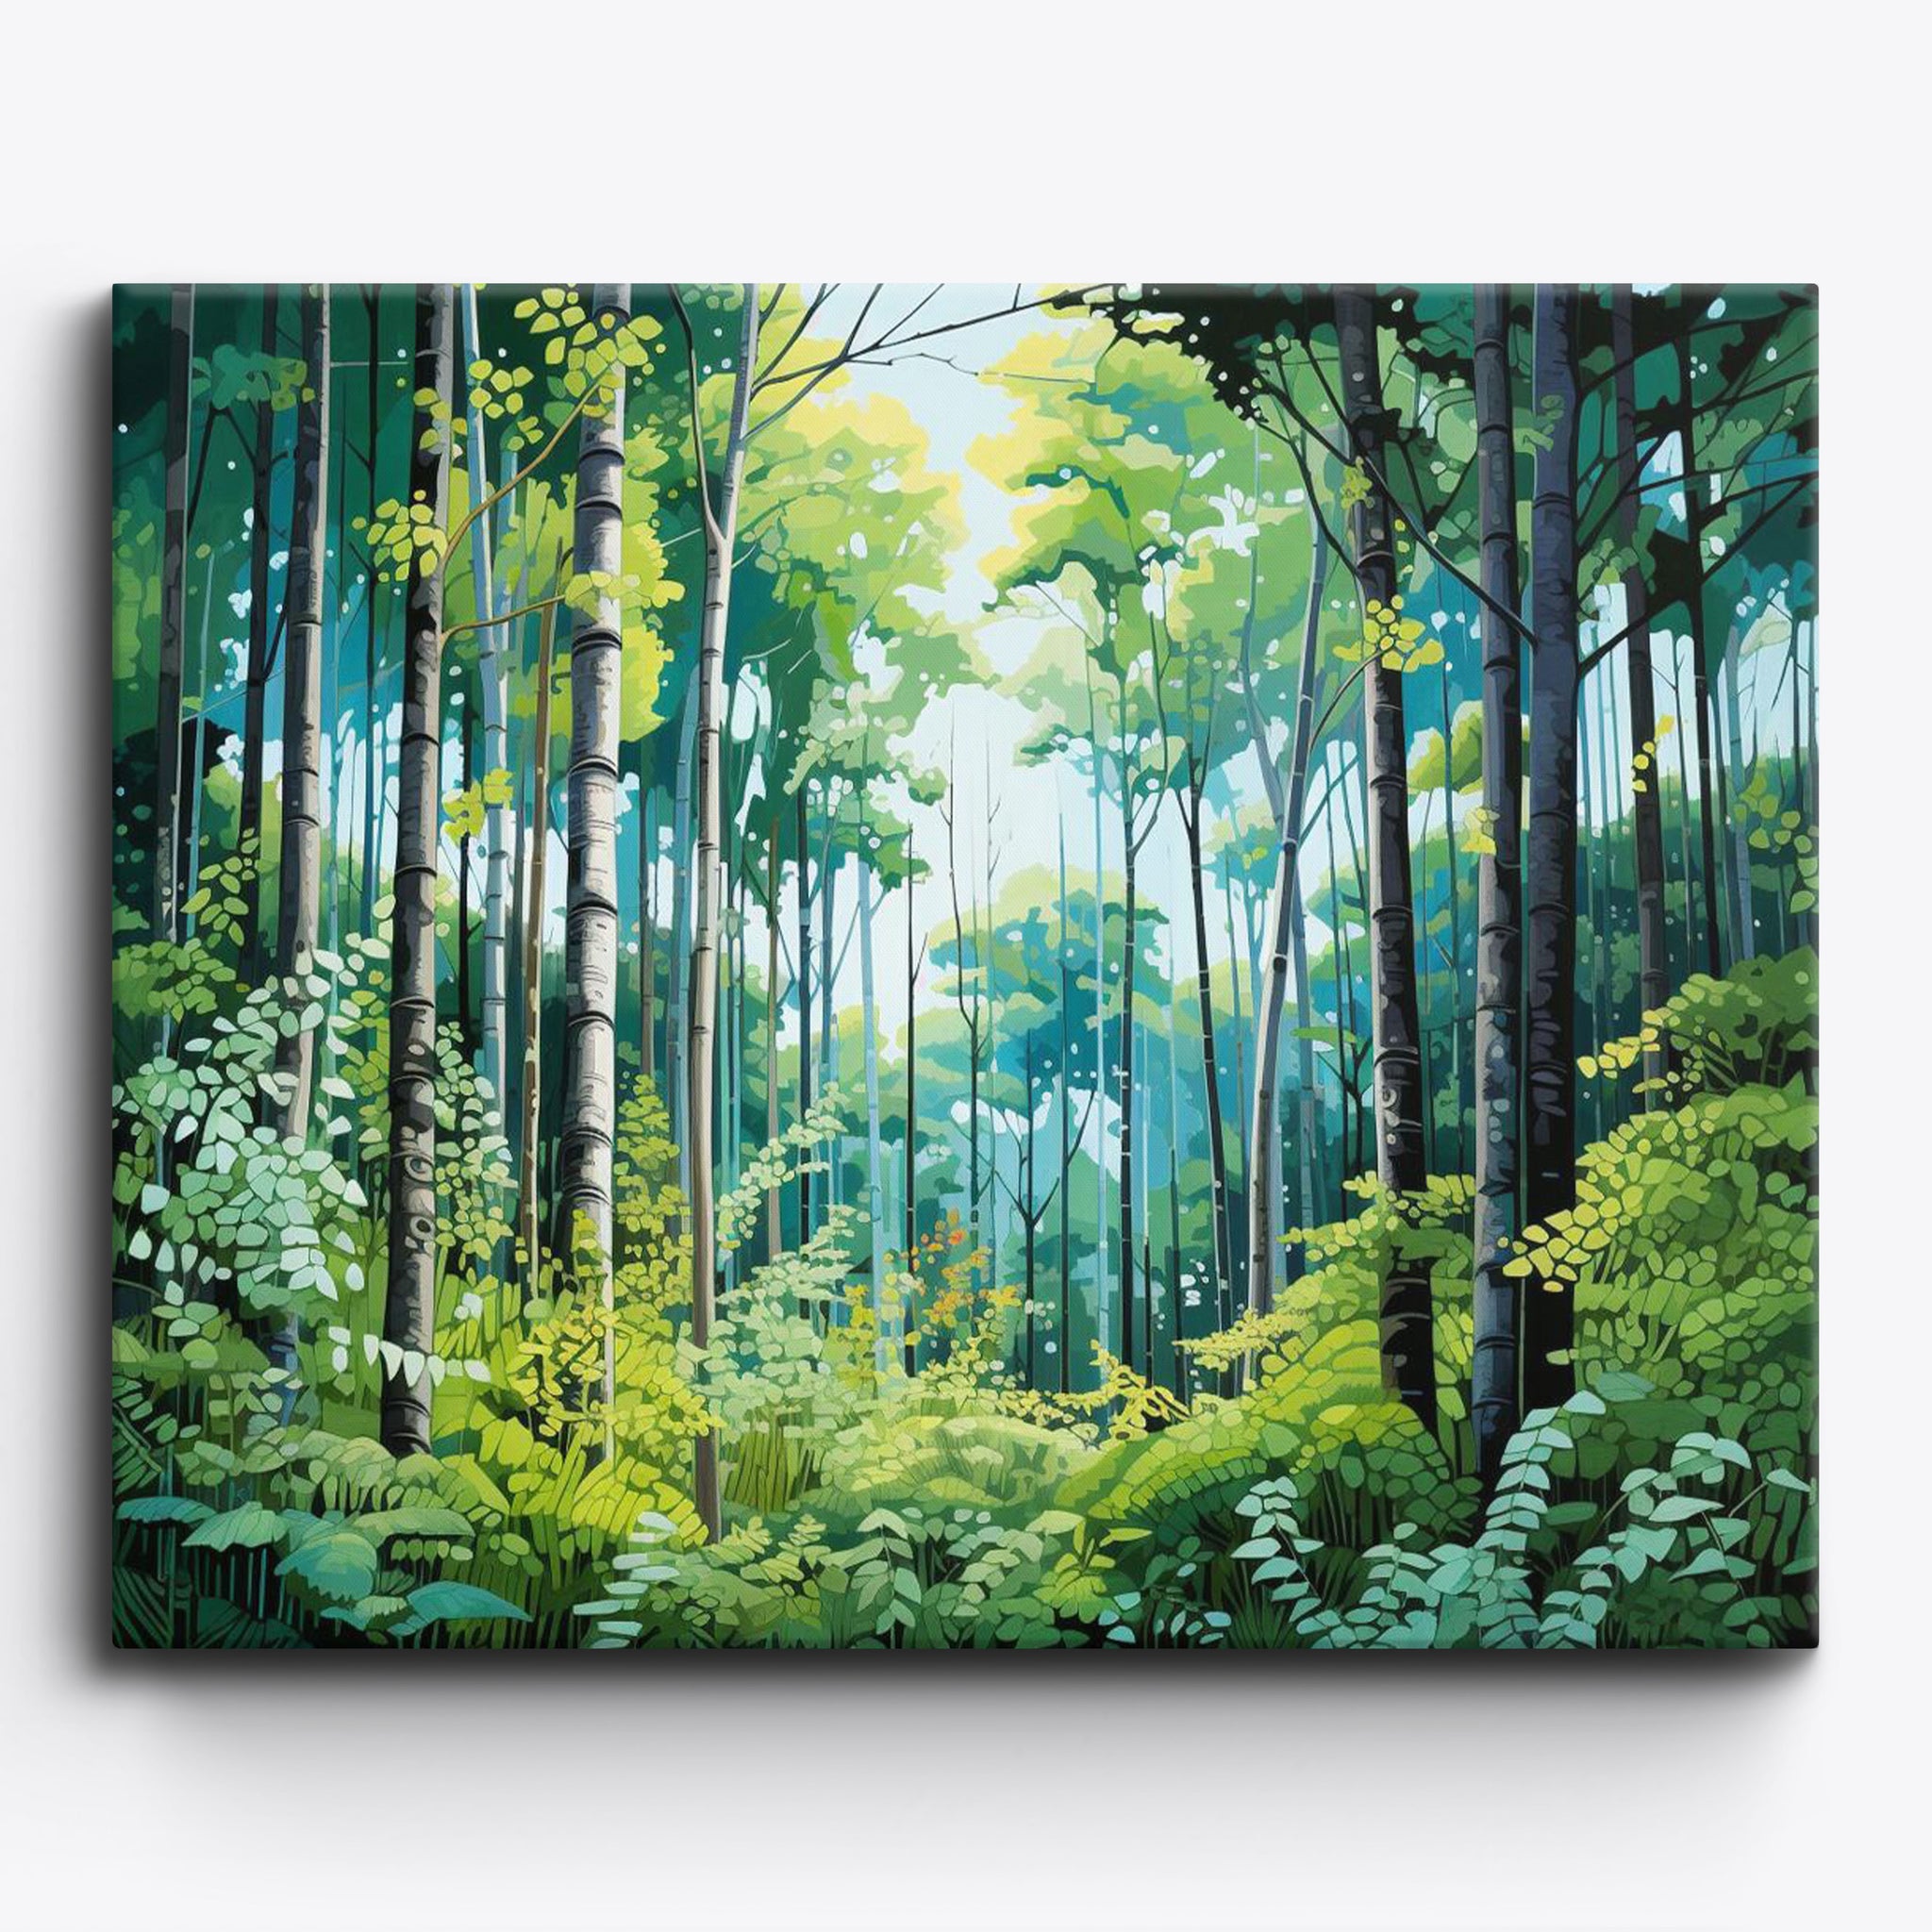 Jual Mideer WaterColor Painting - Forest / Garden / Dream [Painting Brush]  - Kota Surabaya - Hundred Acre